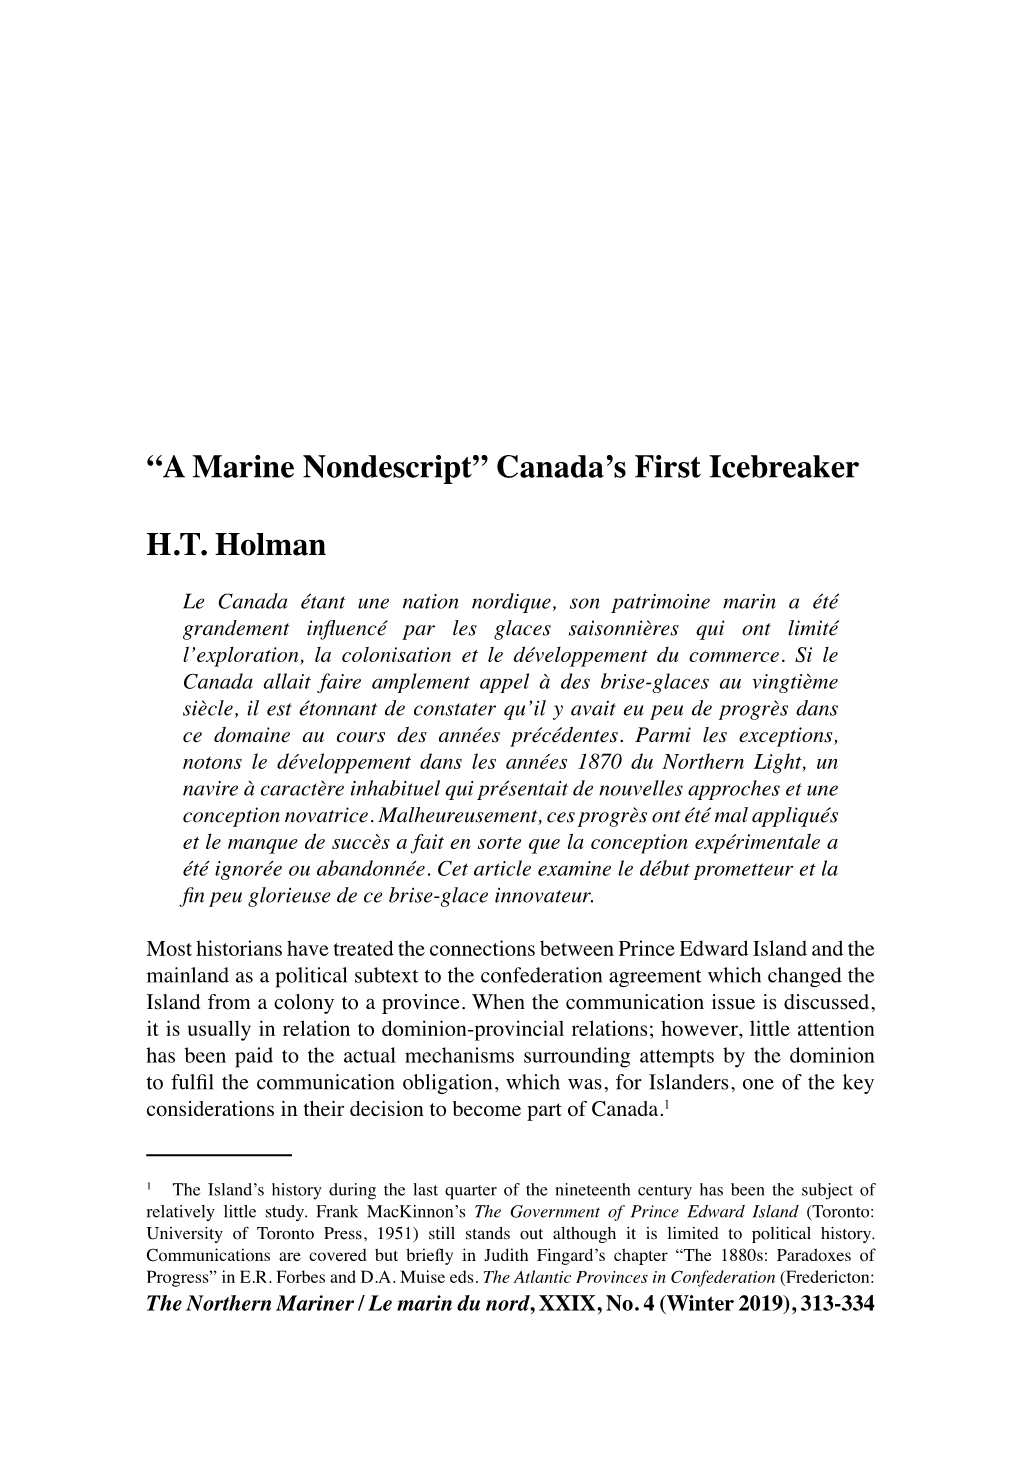 A Marine Nondescript” Canada’S First Icebreaker